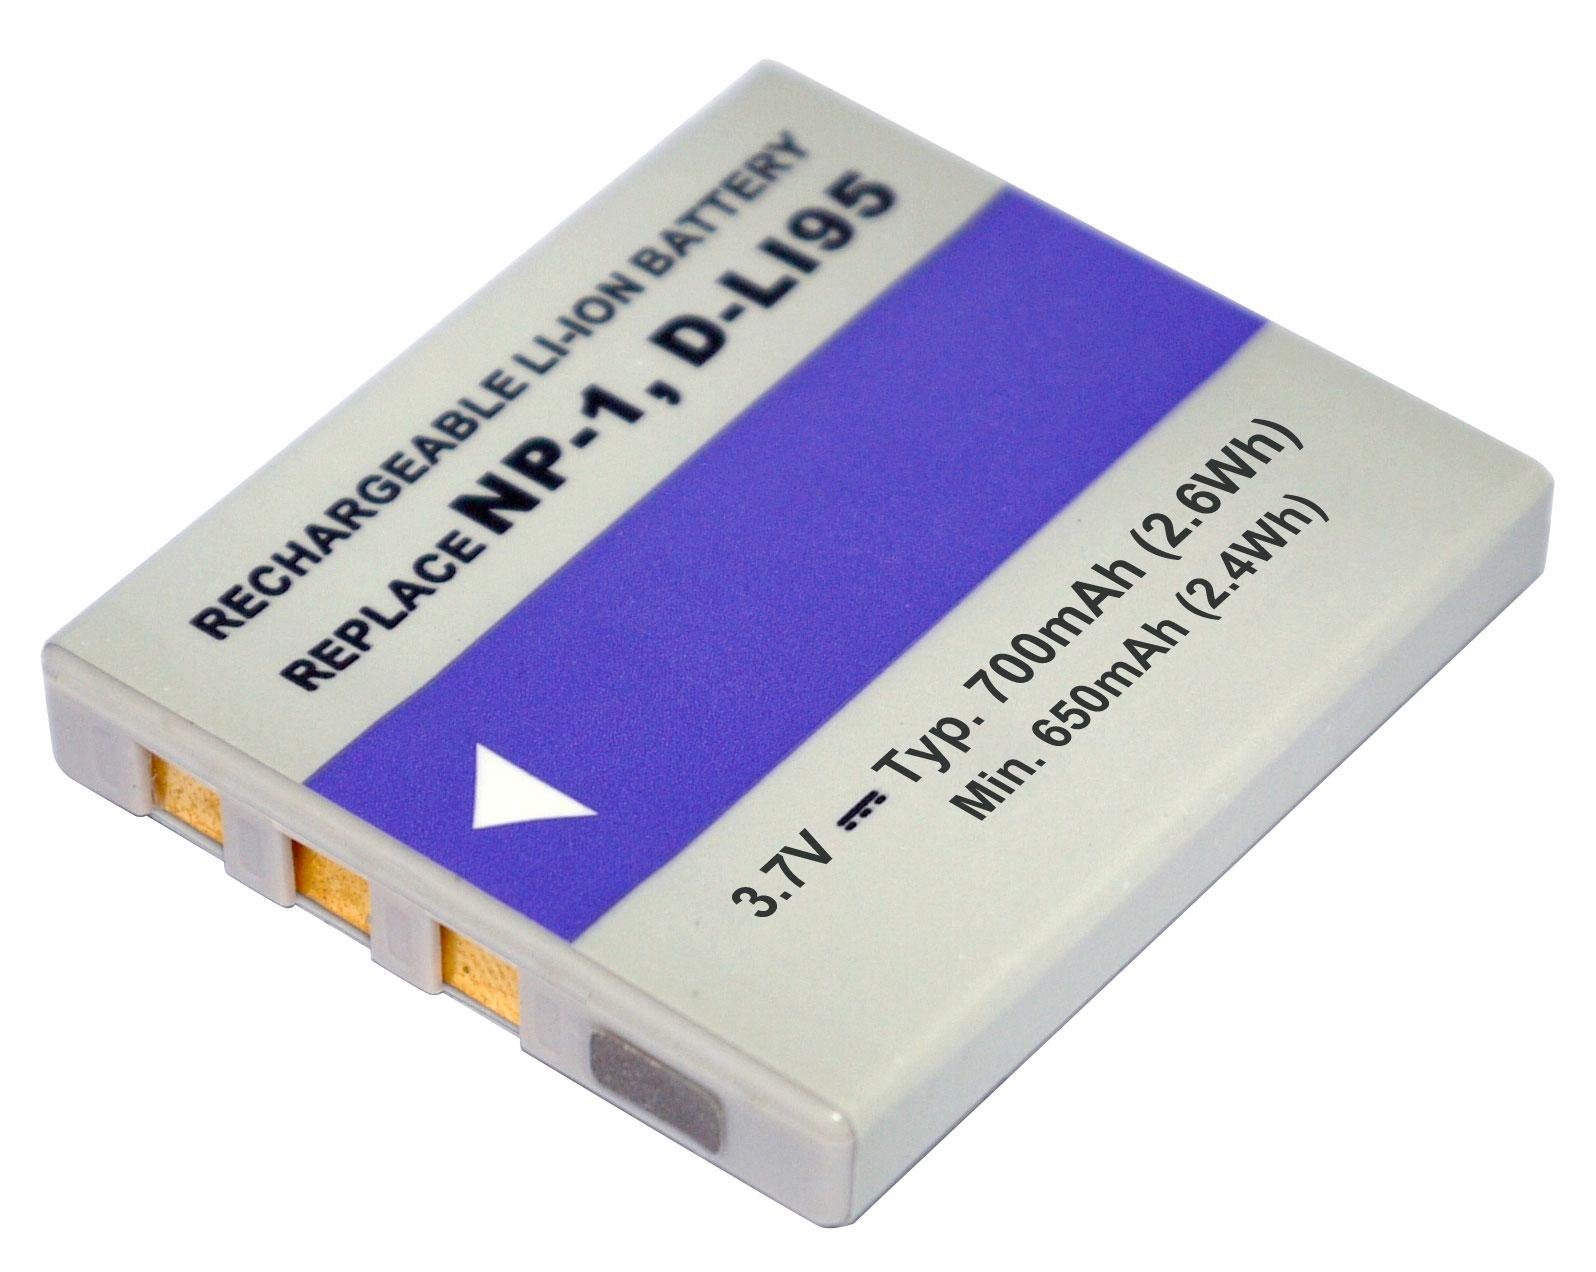 L73, NV7, NV3, (Li-ion) L80, NV7 PowerSmart Ersatzbatterie (3,7 i6 SLB-0837, für Digimax OPS Kamera-Akku V), SAMSUNG i70S, NV5, PMP, i70, Digimax L700, DKN004.533 L60, Lithium-ion L700S, 700 Digimax L50, Digimax Ersatz mAh